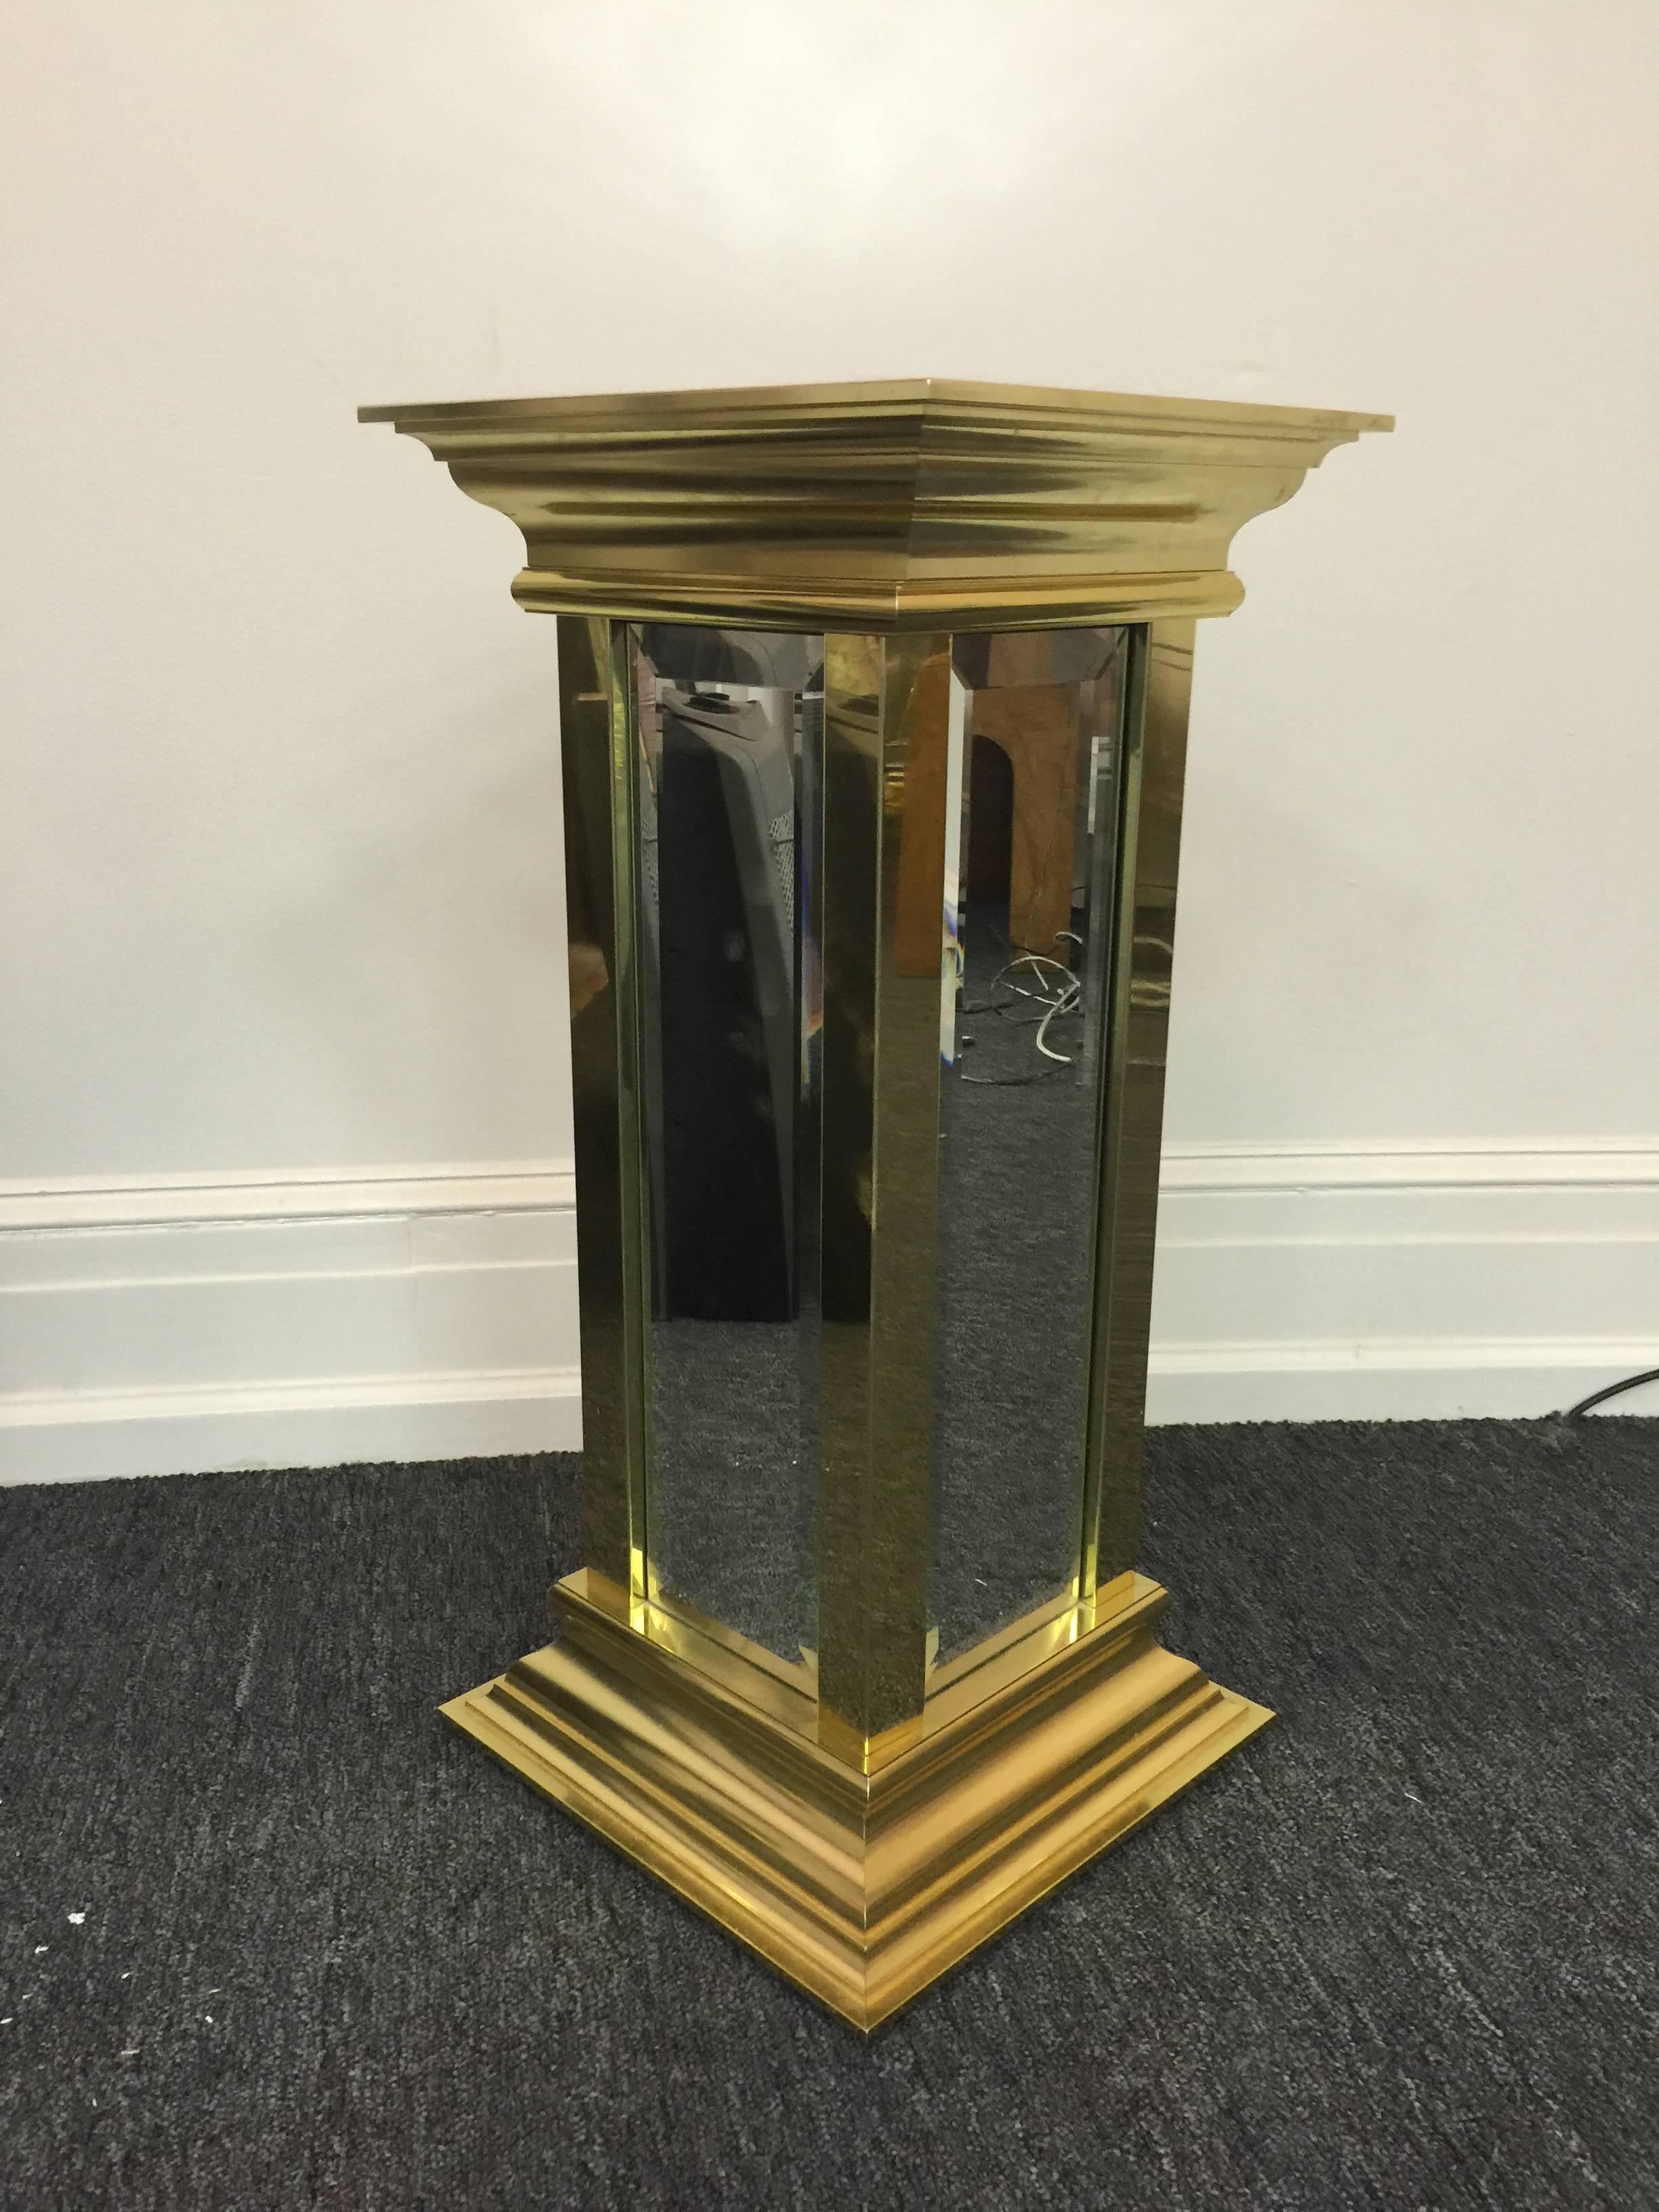 A magnificent brass and mirrored pedestal by Mastercraft, circa 1970.